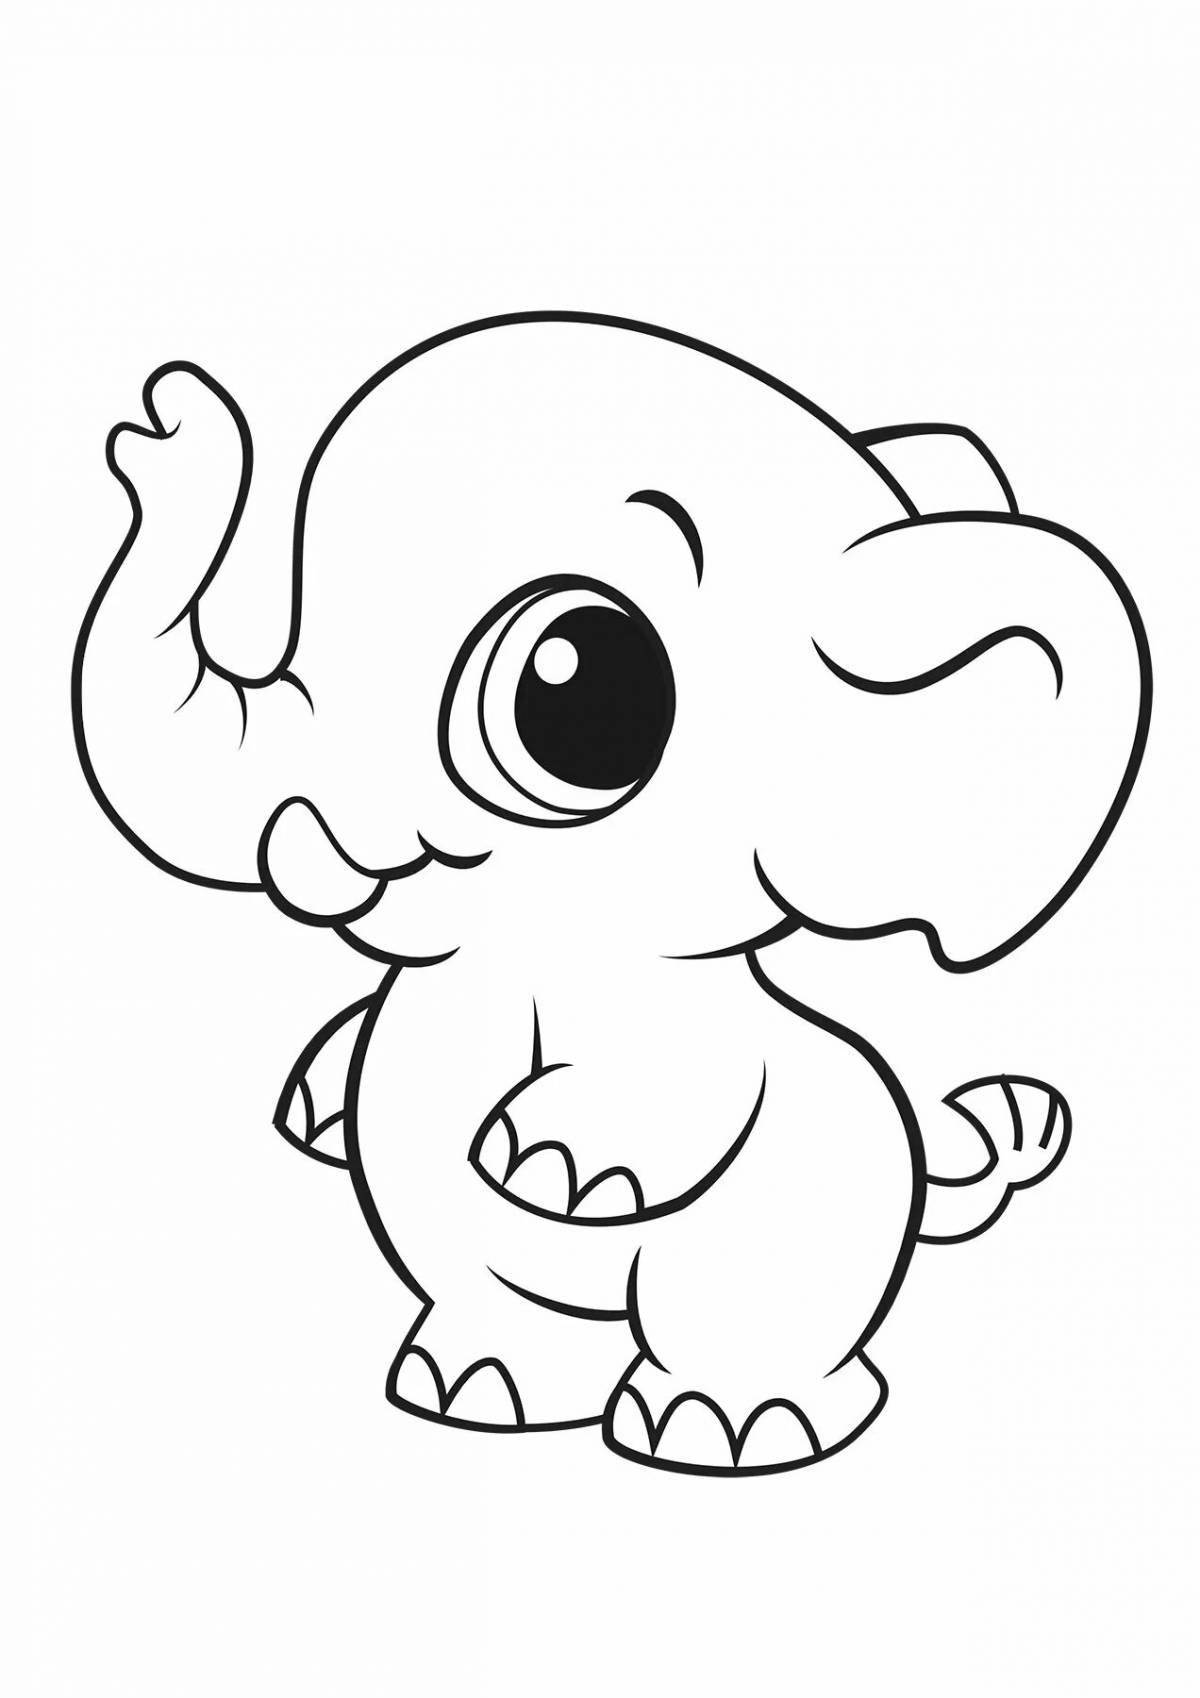 Shiny elephant coloring page